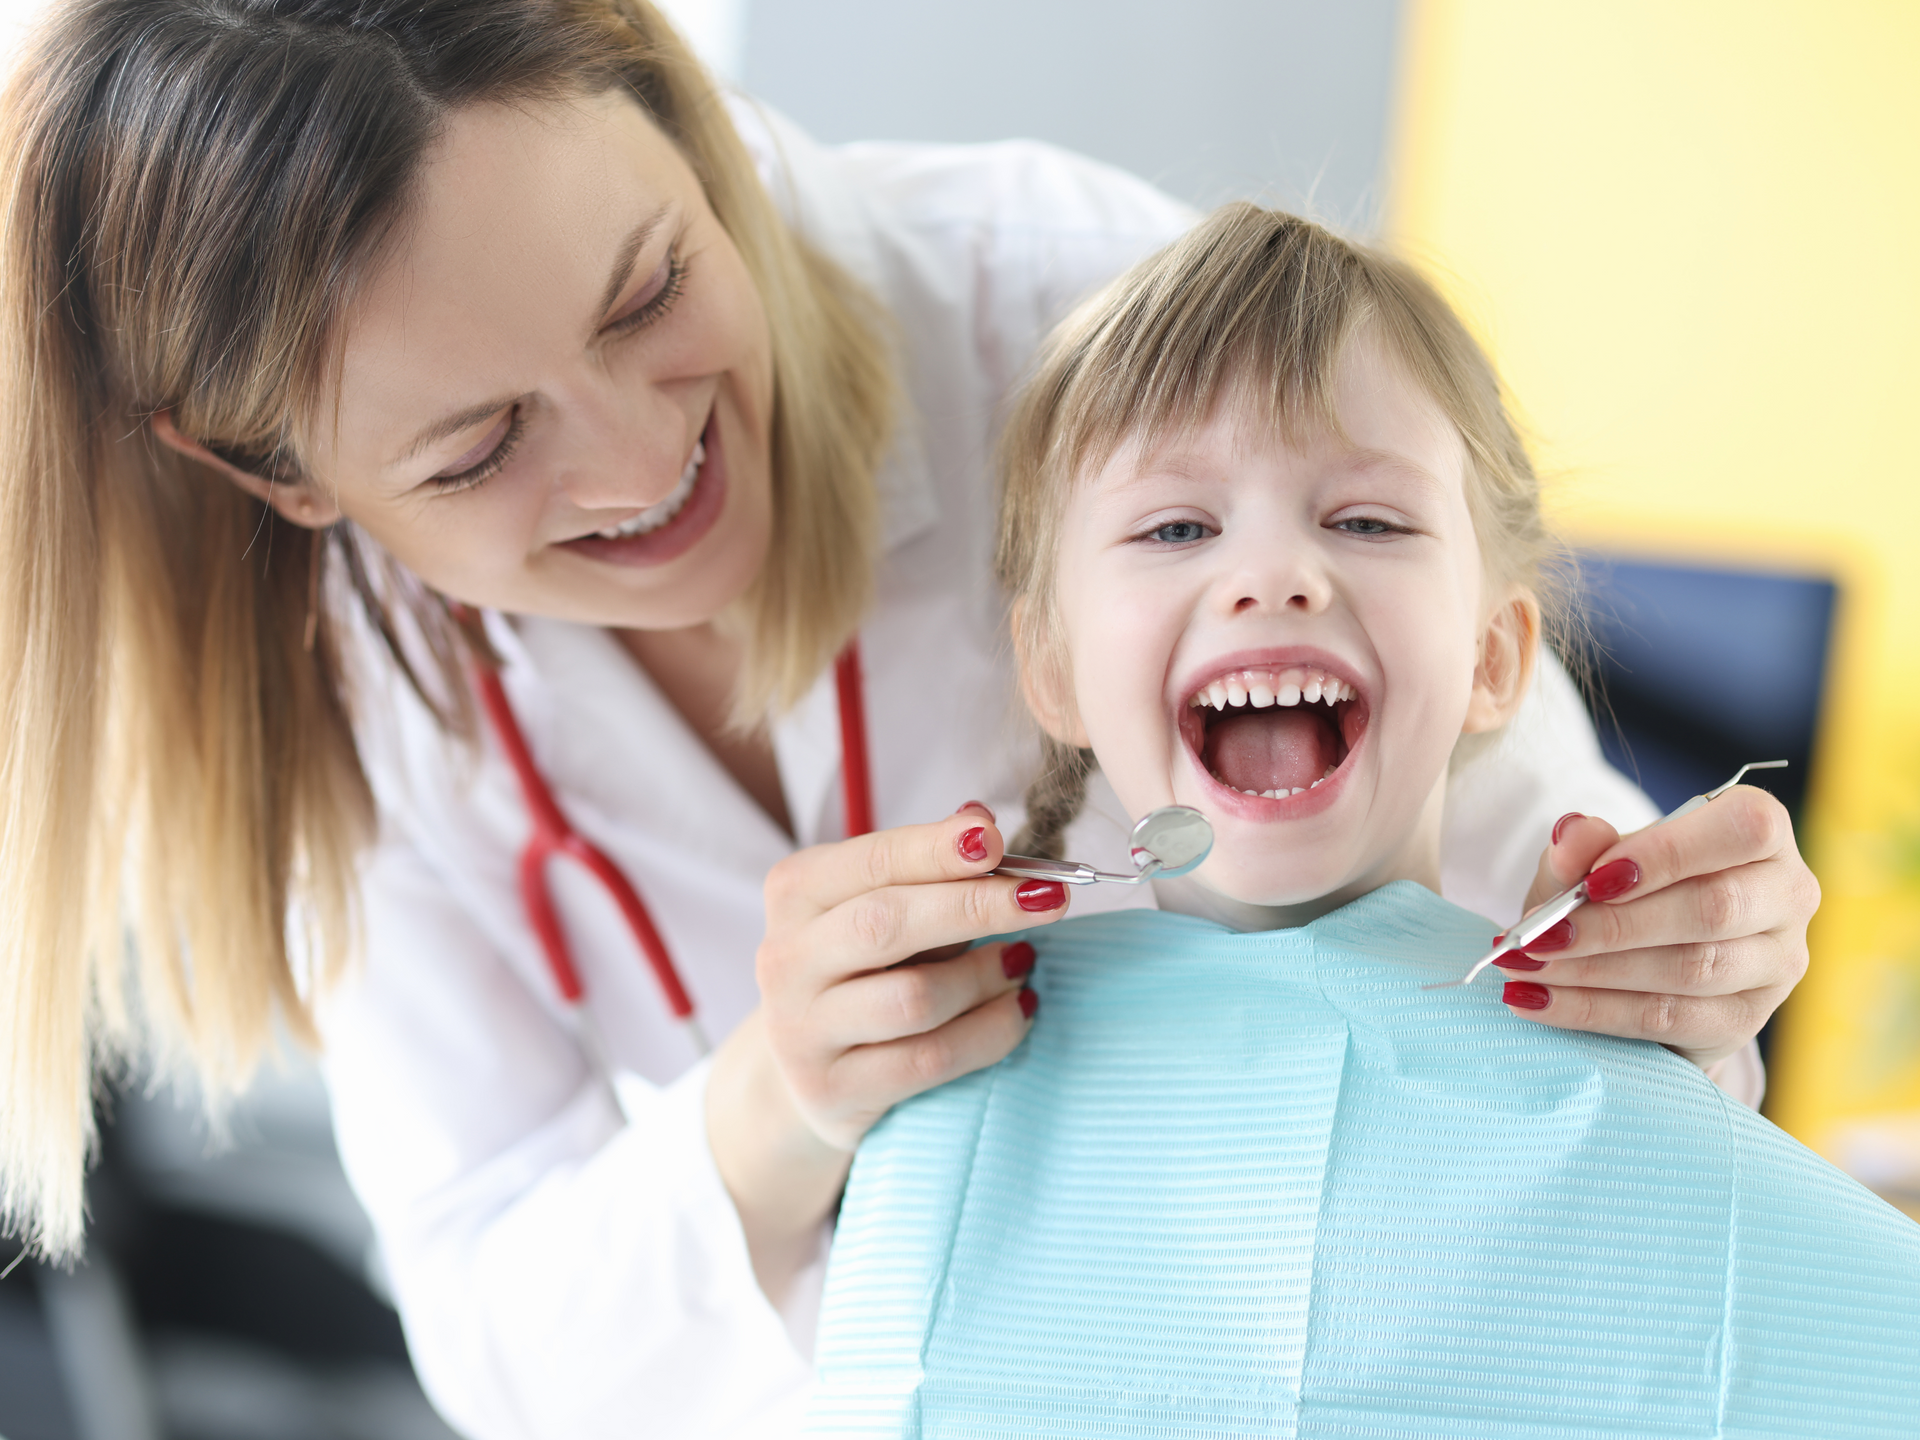 a female dentist is examining a little girl 's teeth in a dental office .